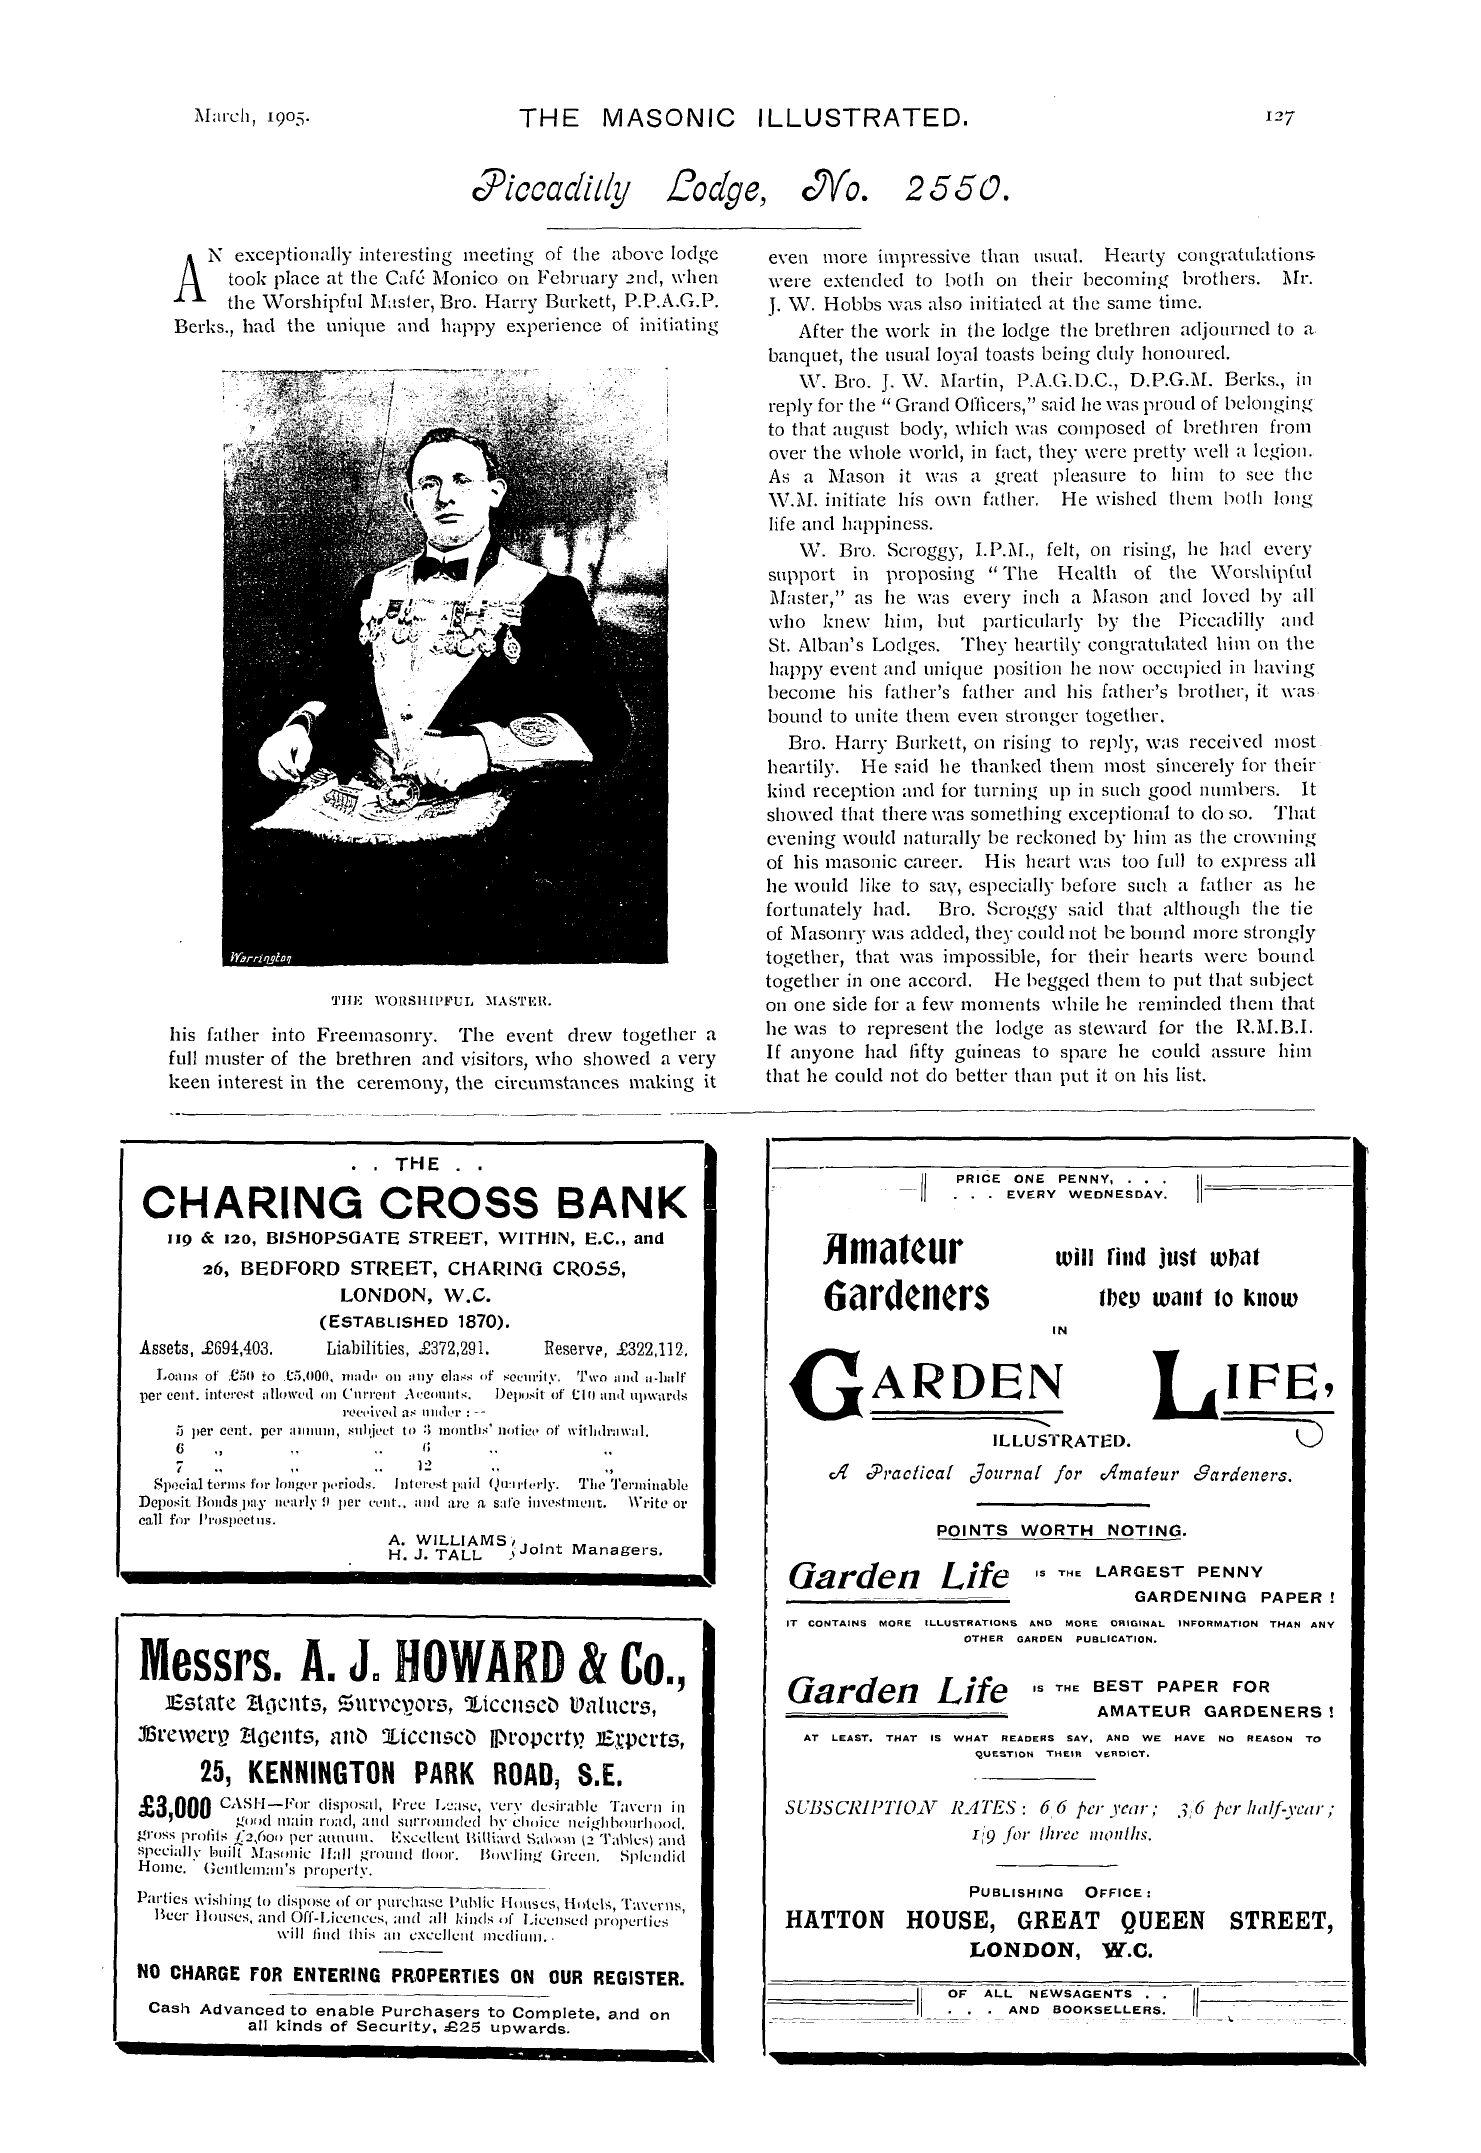 The Masonic Illustrated: 1905-03-01: 15